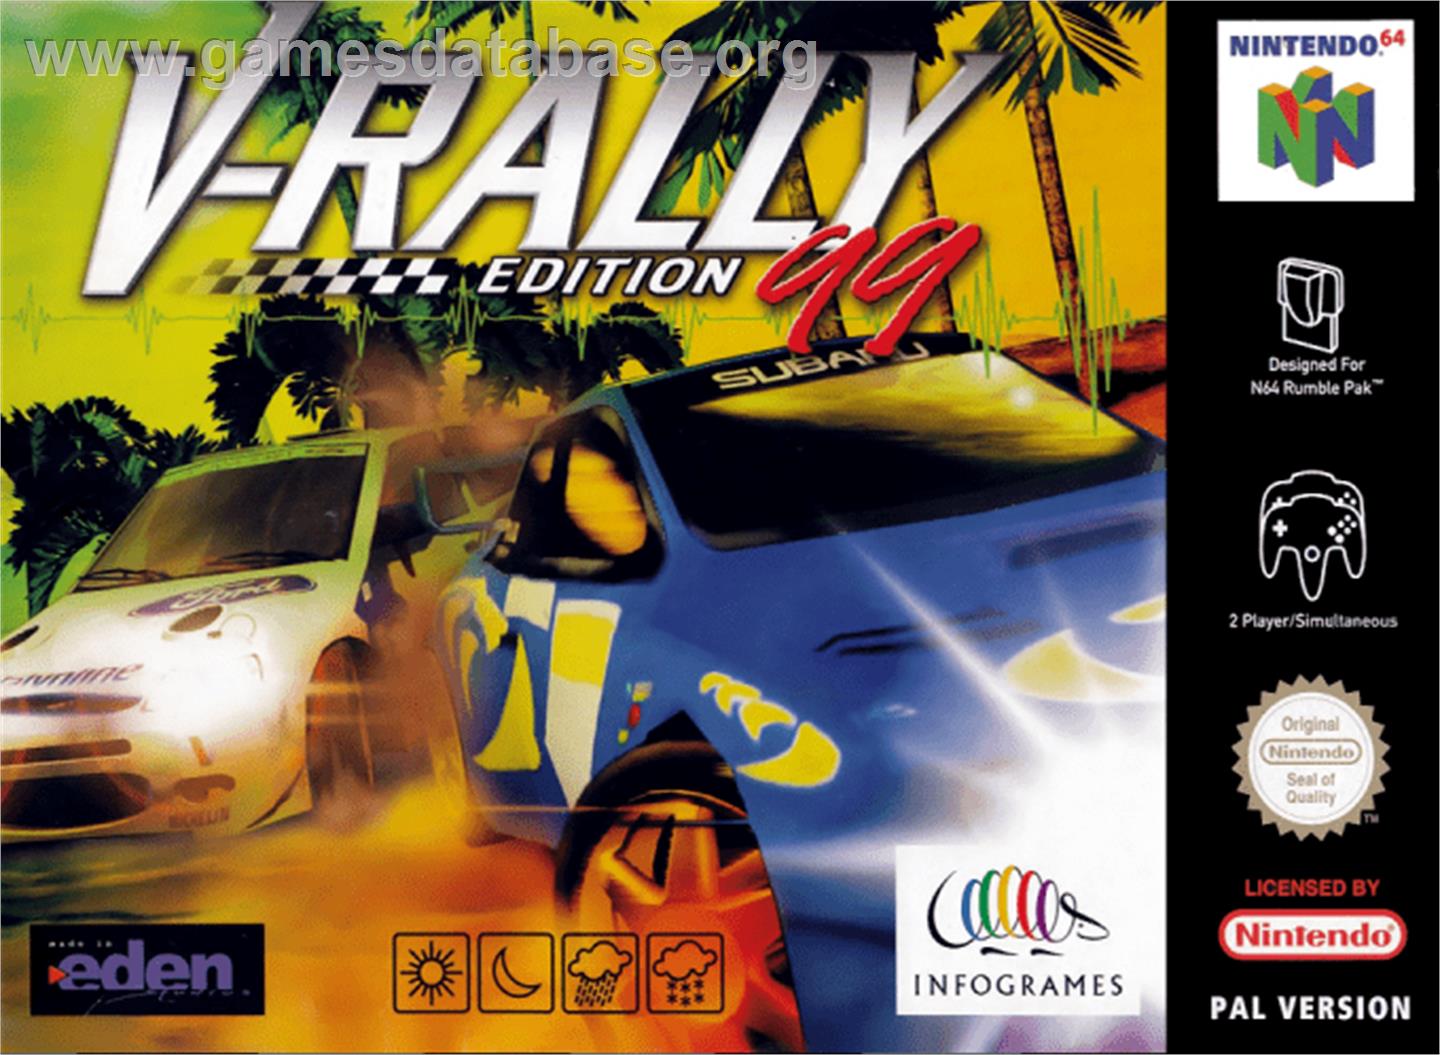 V-Rally Edition 99 - Nintendo N64 - Artwork - Box